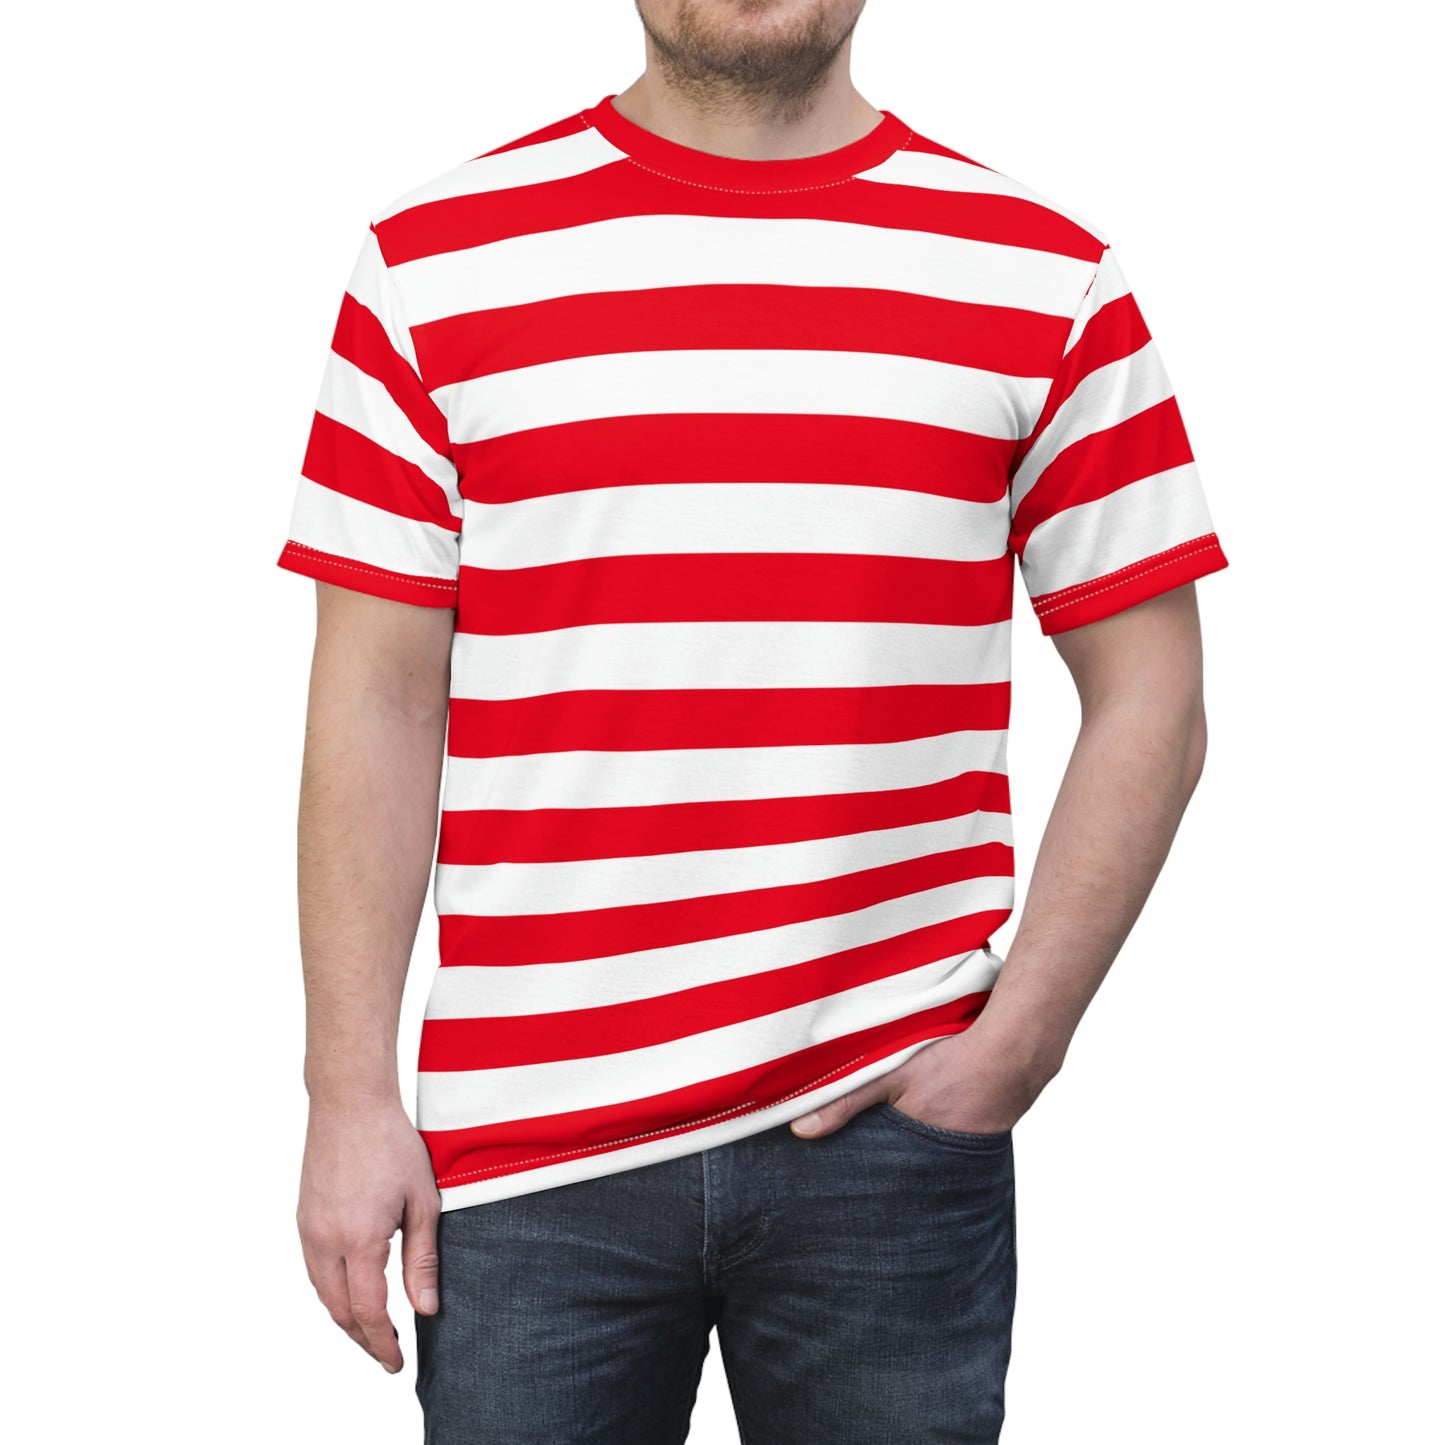 Red and White Striped Men Tshirt, Horizontal Bold Stripes Designer Graphic Aesthetic Fashion Crewneck Tee Top Gift Shirt